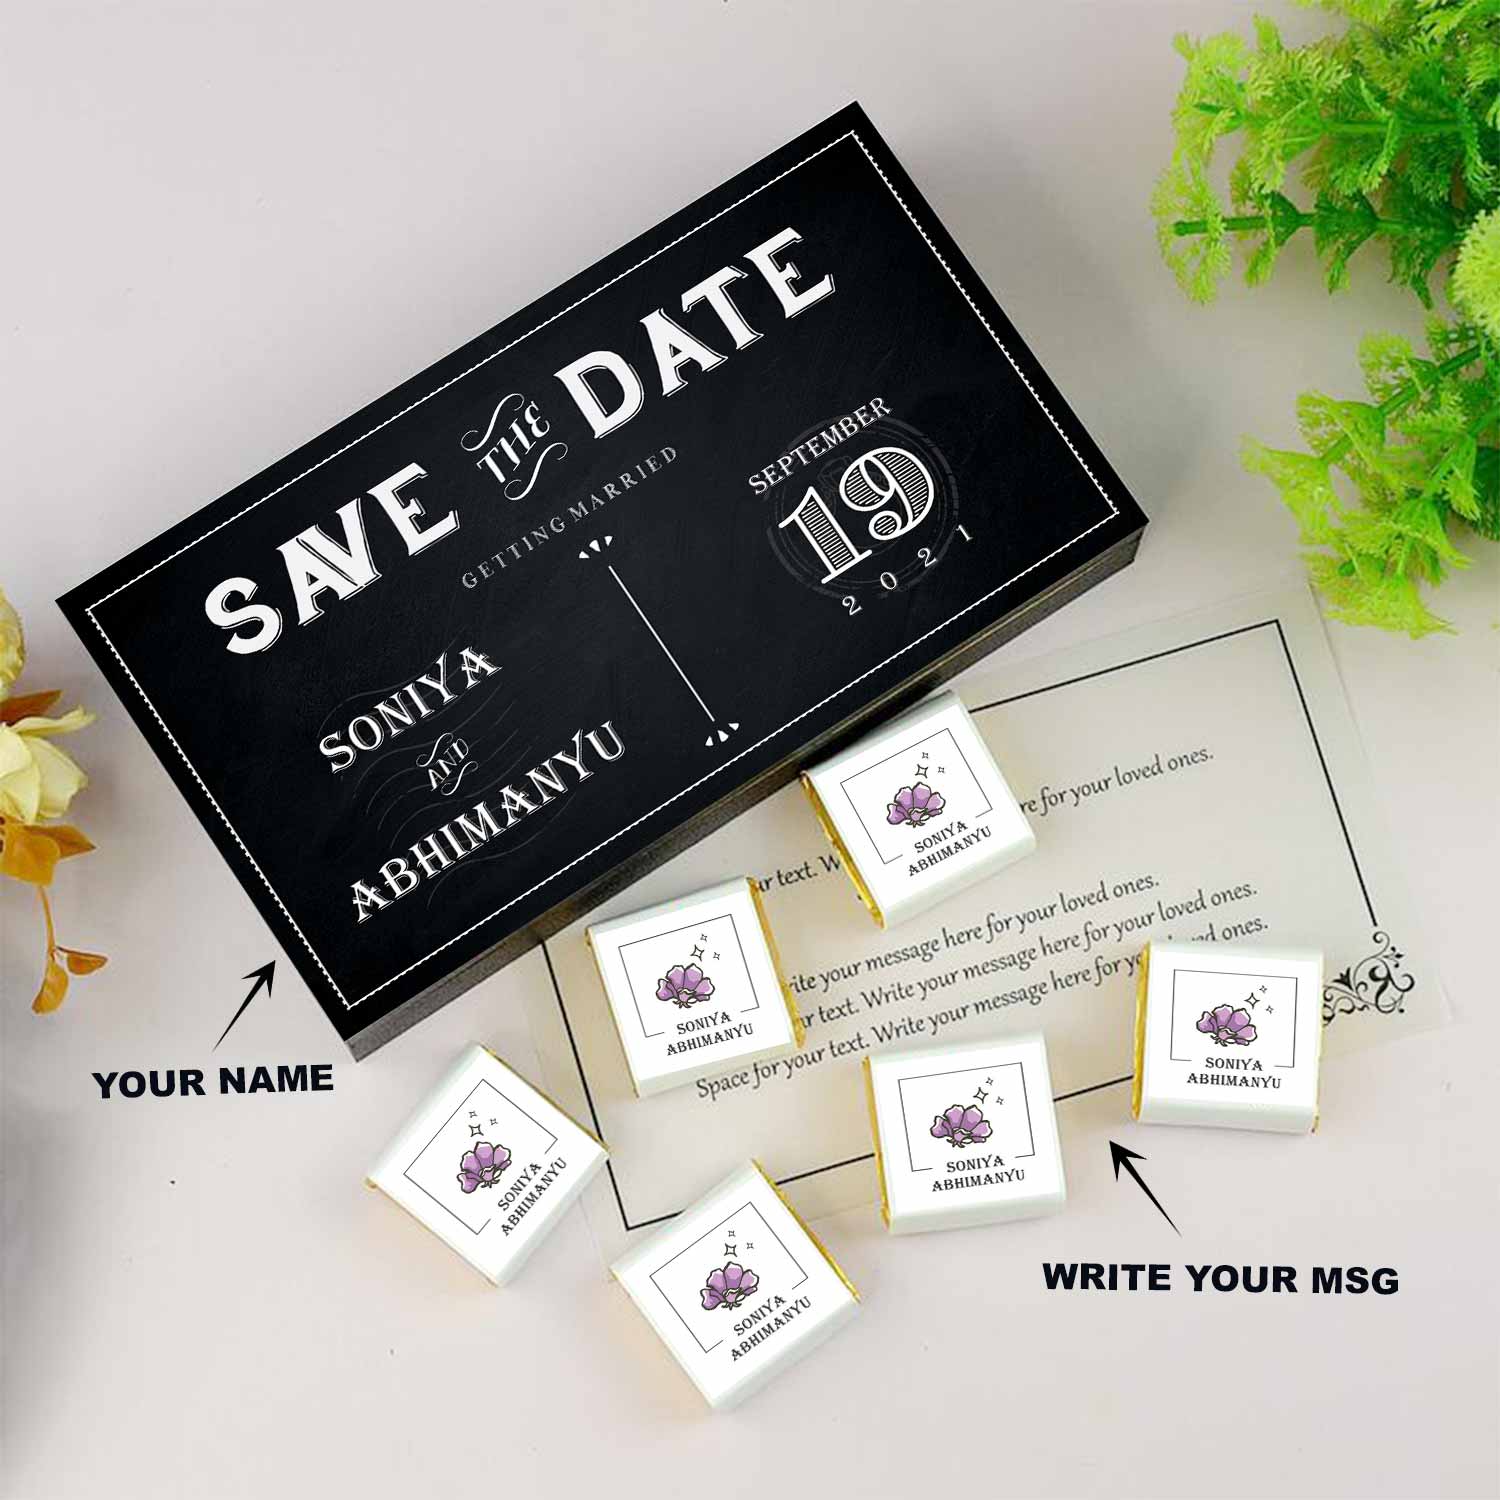 Wedding card gift box ideas.  Chocolate gift box wedding invitation.  Wedding invitation gift ideas    Invitation box for birthday